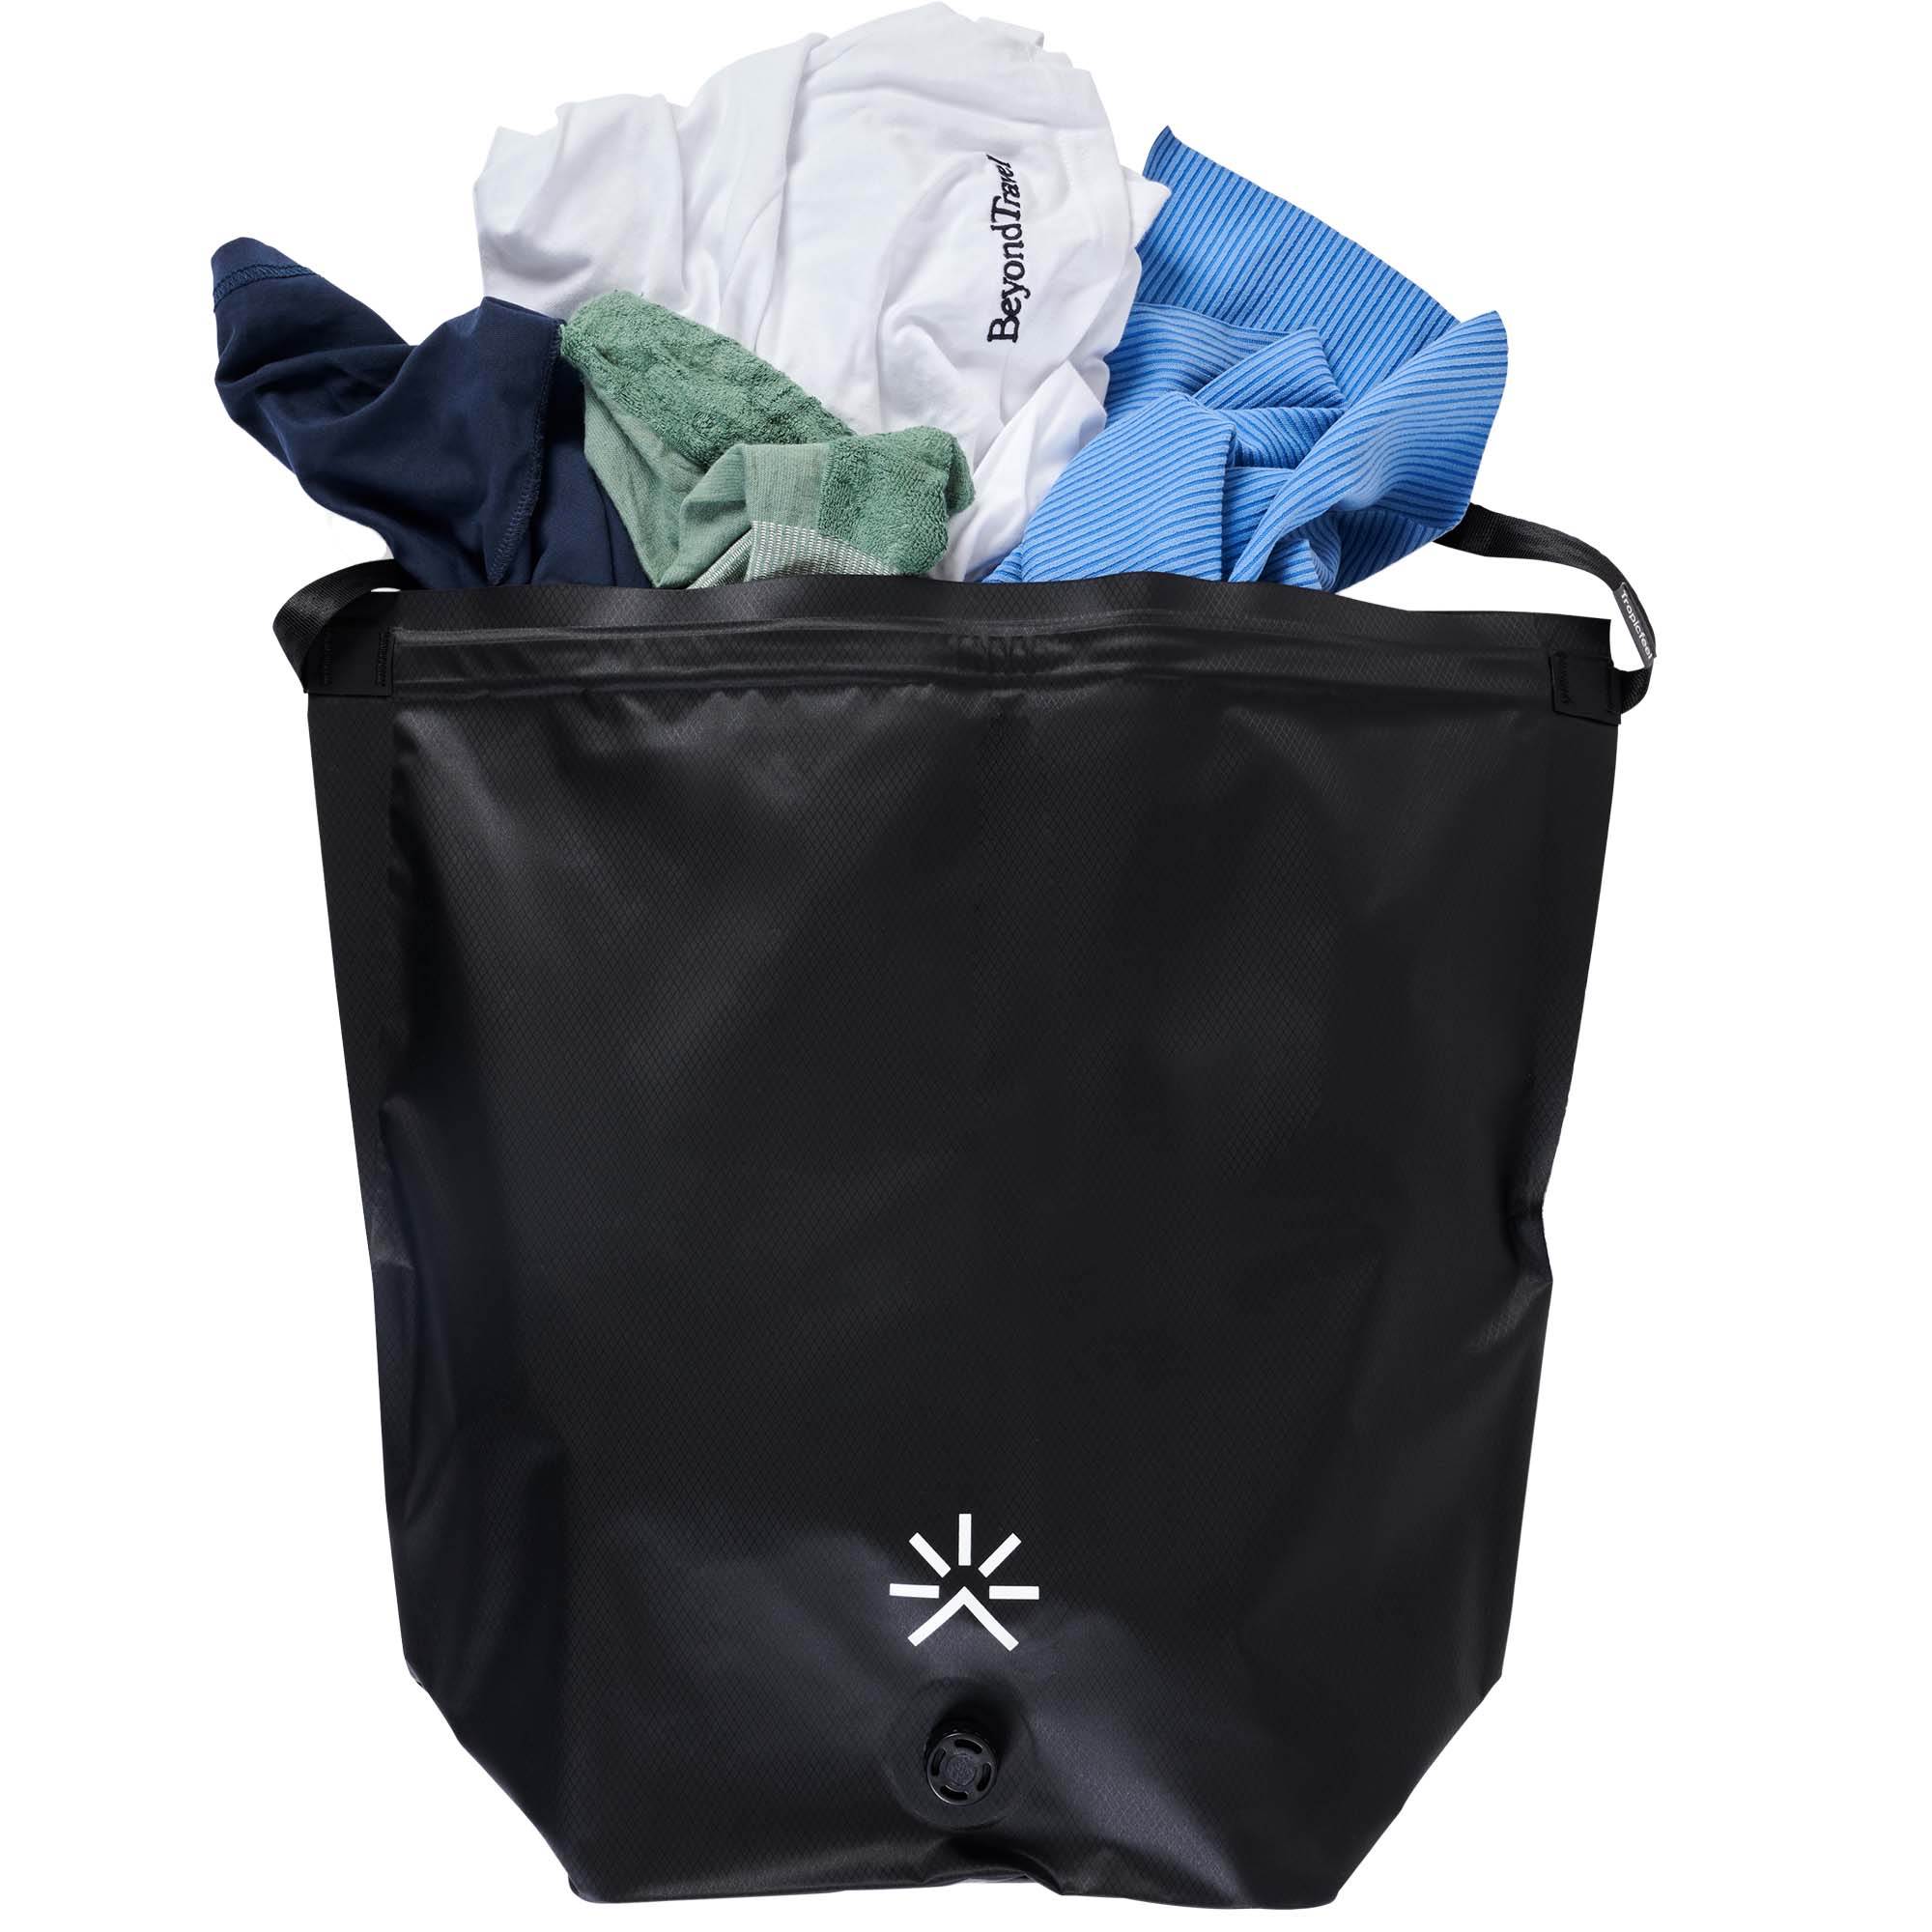 Tropicfeel Sealed Laundry Bag Travel Accessory